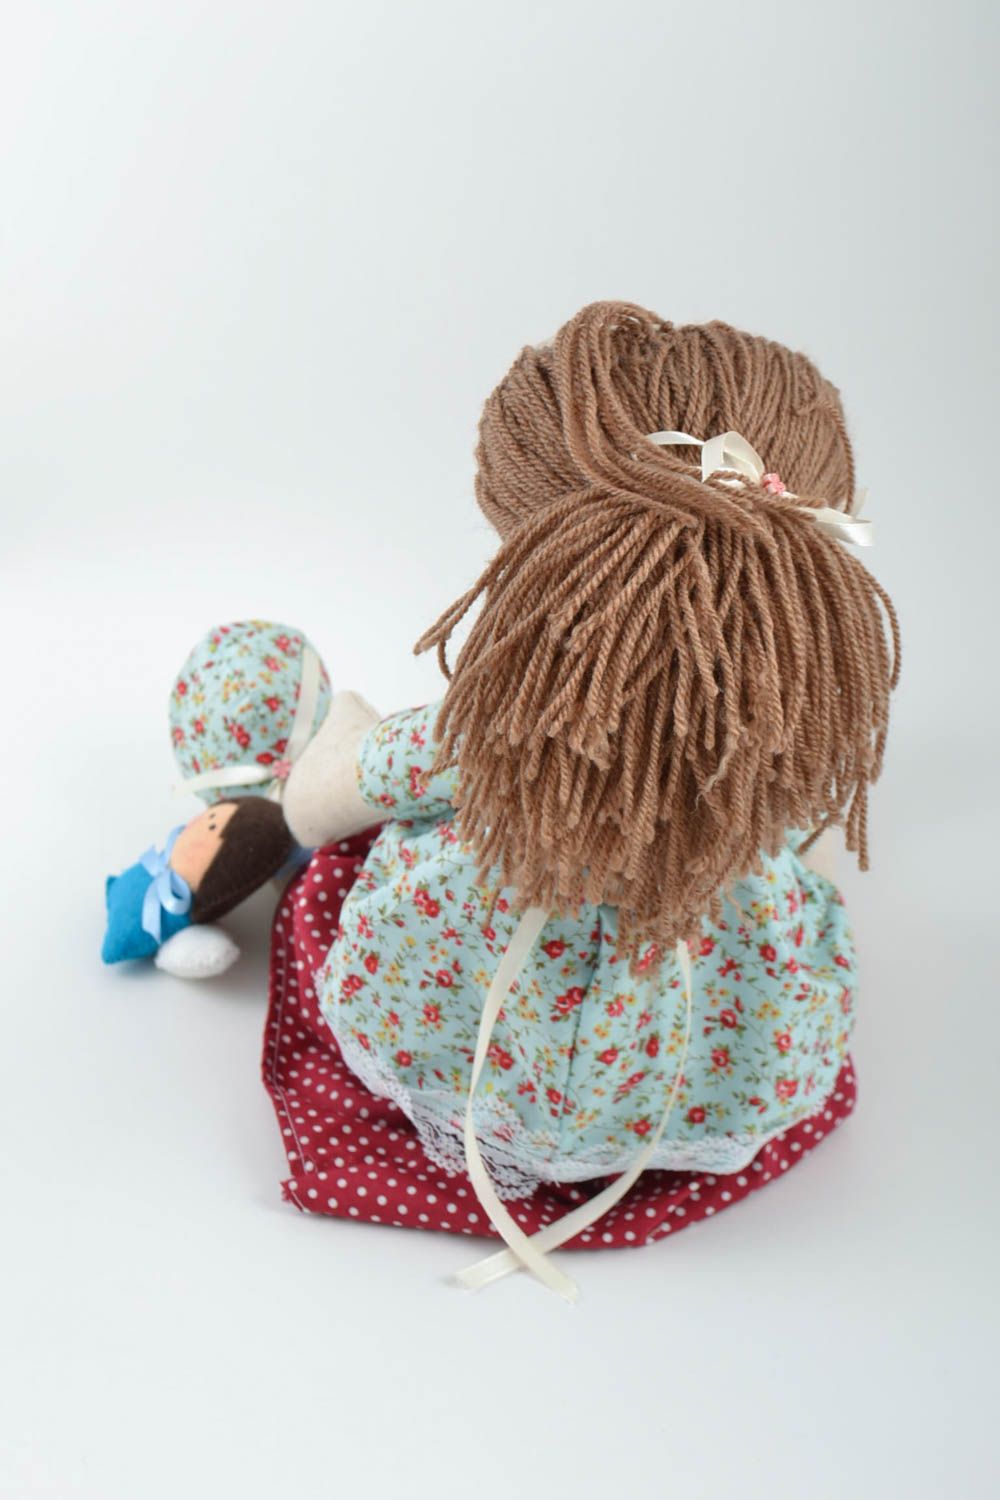 Unusual beautiful handmade fabric soft doll for children and interior decor photo 4